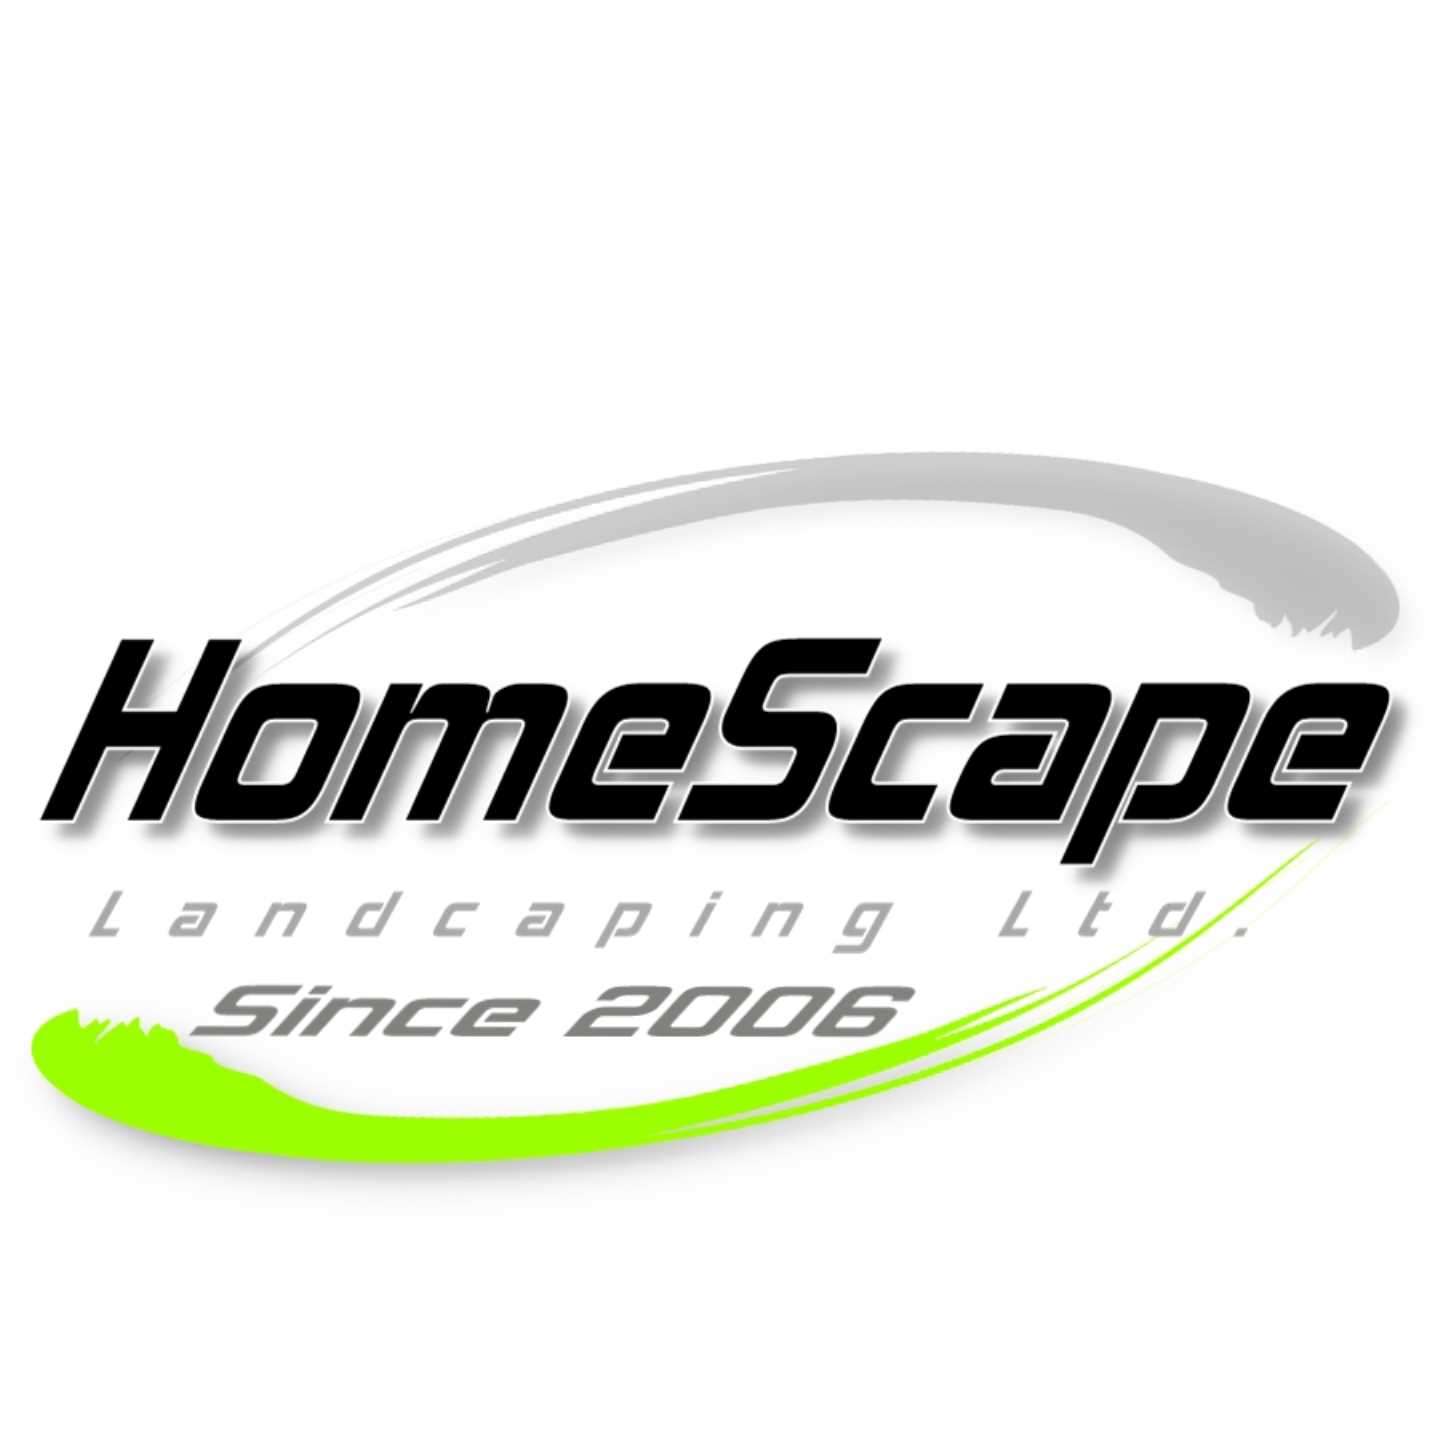 Homescape Landscaping Ltd. Logo